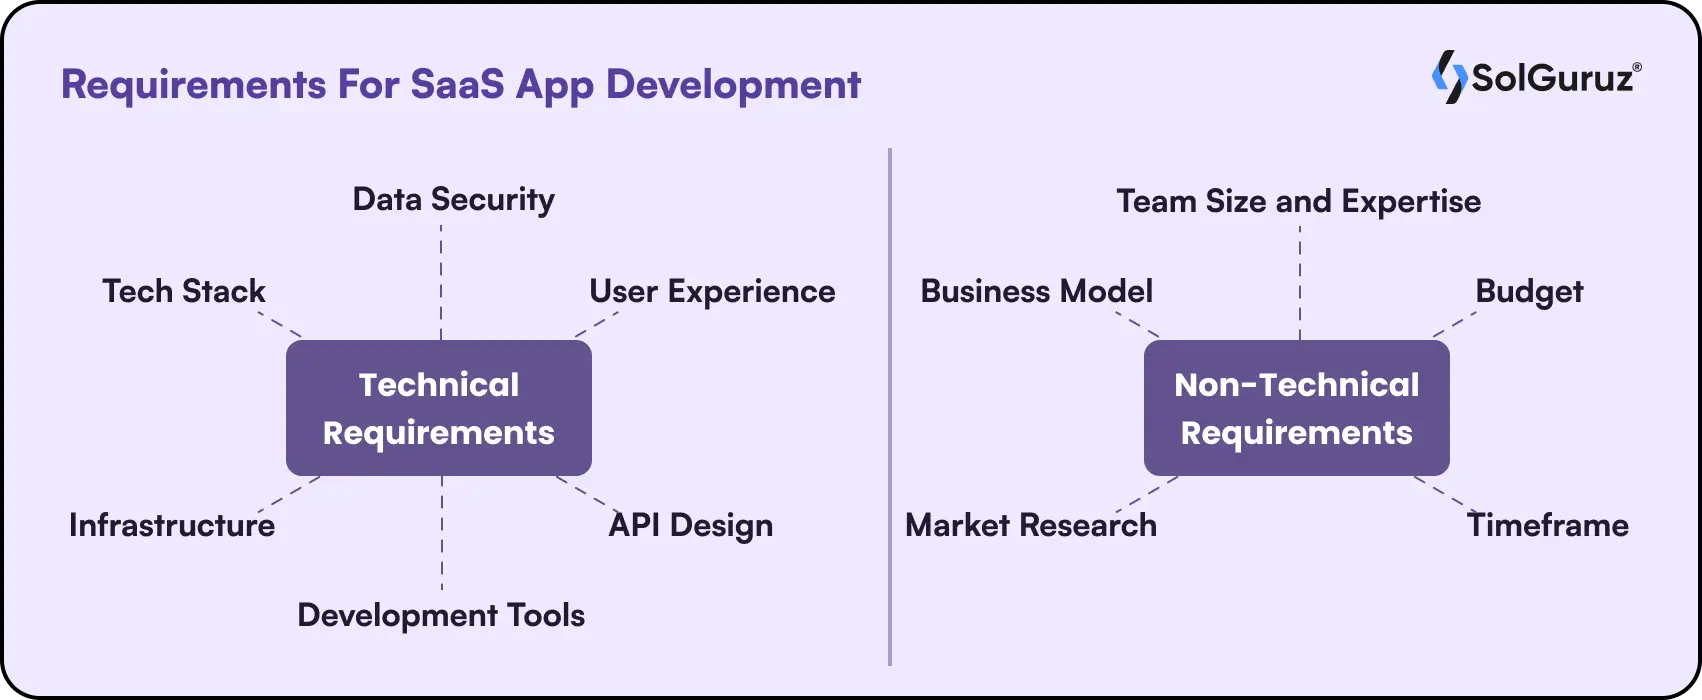 Requirements For SaaS App Development